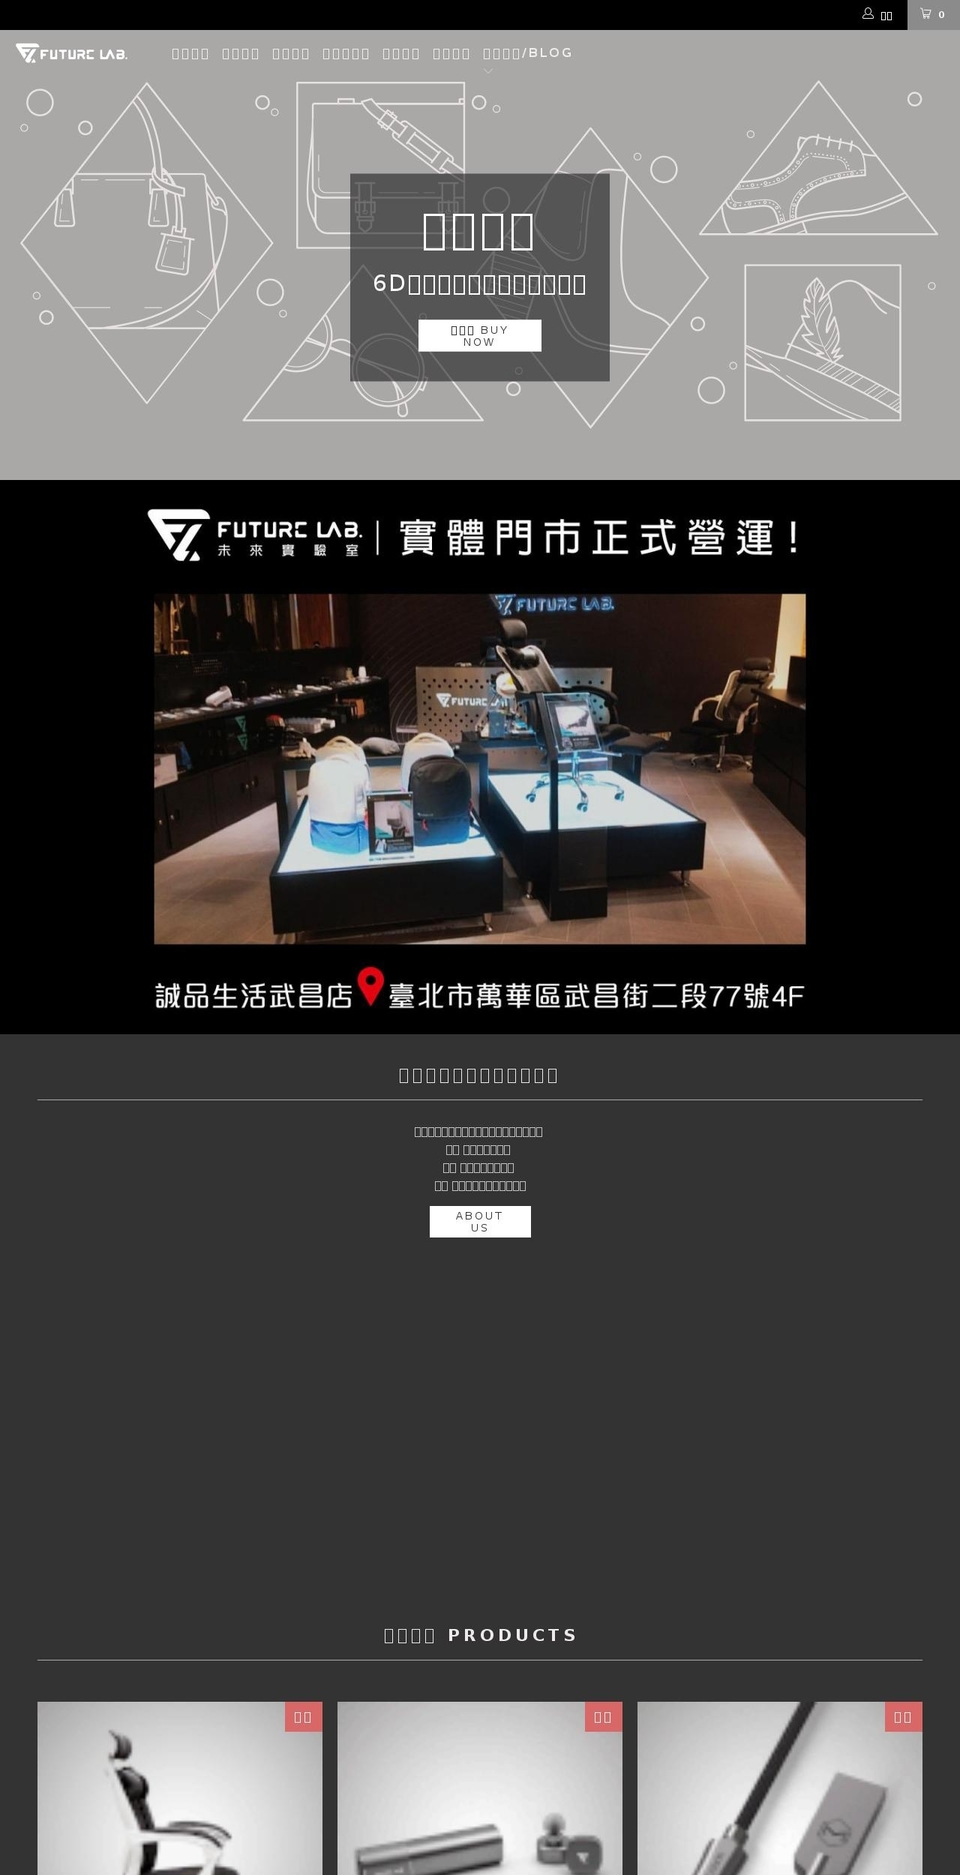 futurelab.tw shopify website screenshot